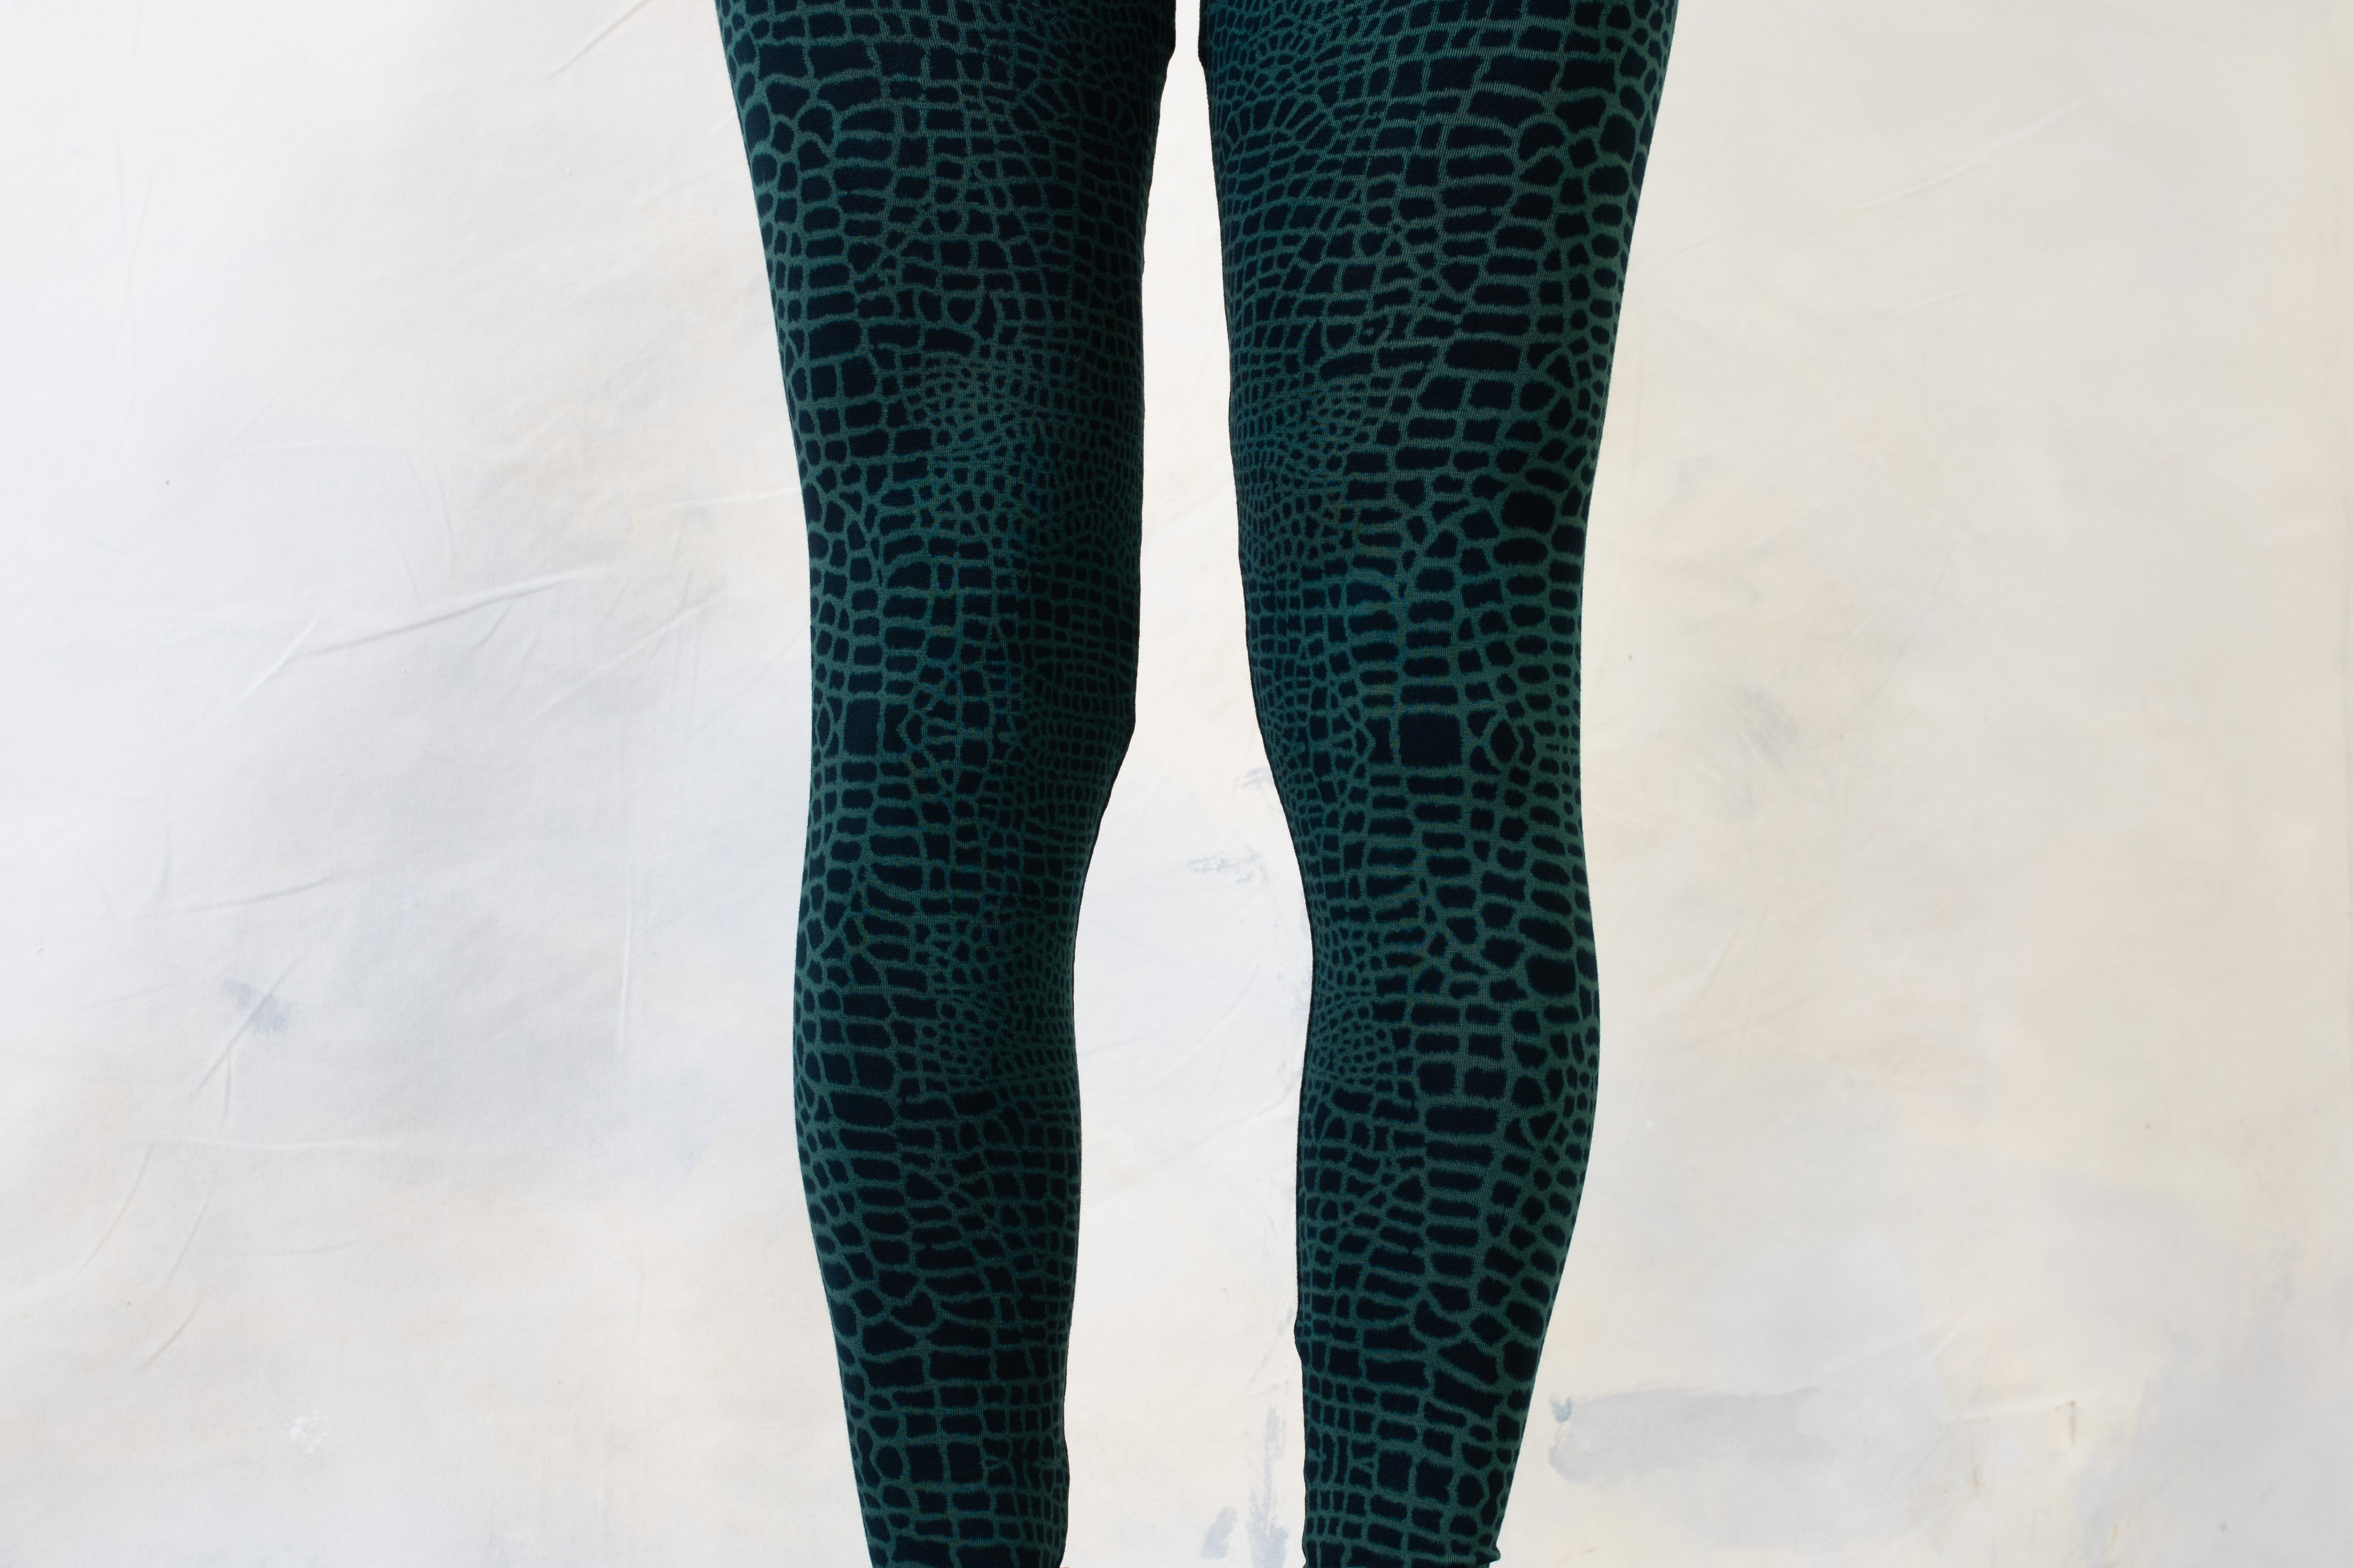 LEGGINGS mit abstraktem Alligator-Muster - unisex - blau-grün